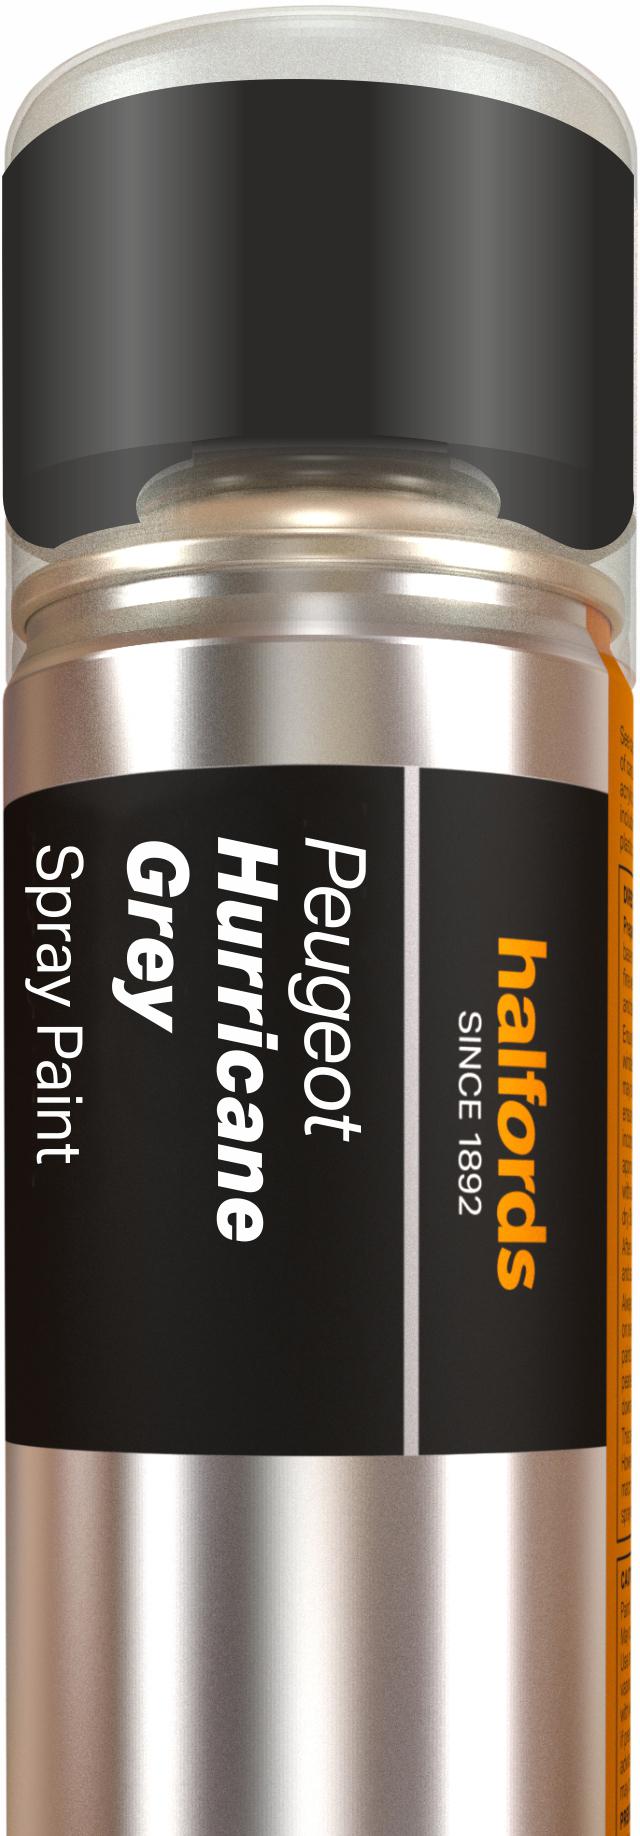 Halfords Peugeot Hurricane Grey Car Spray Paint 300Ml